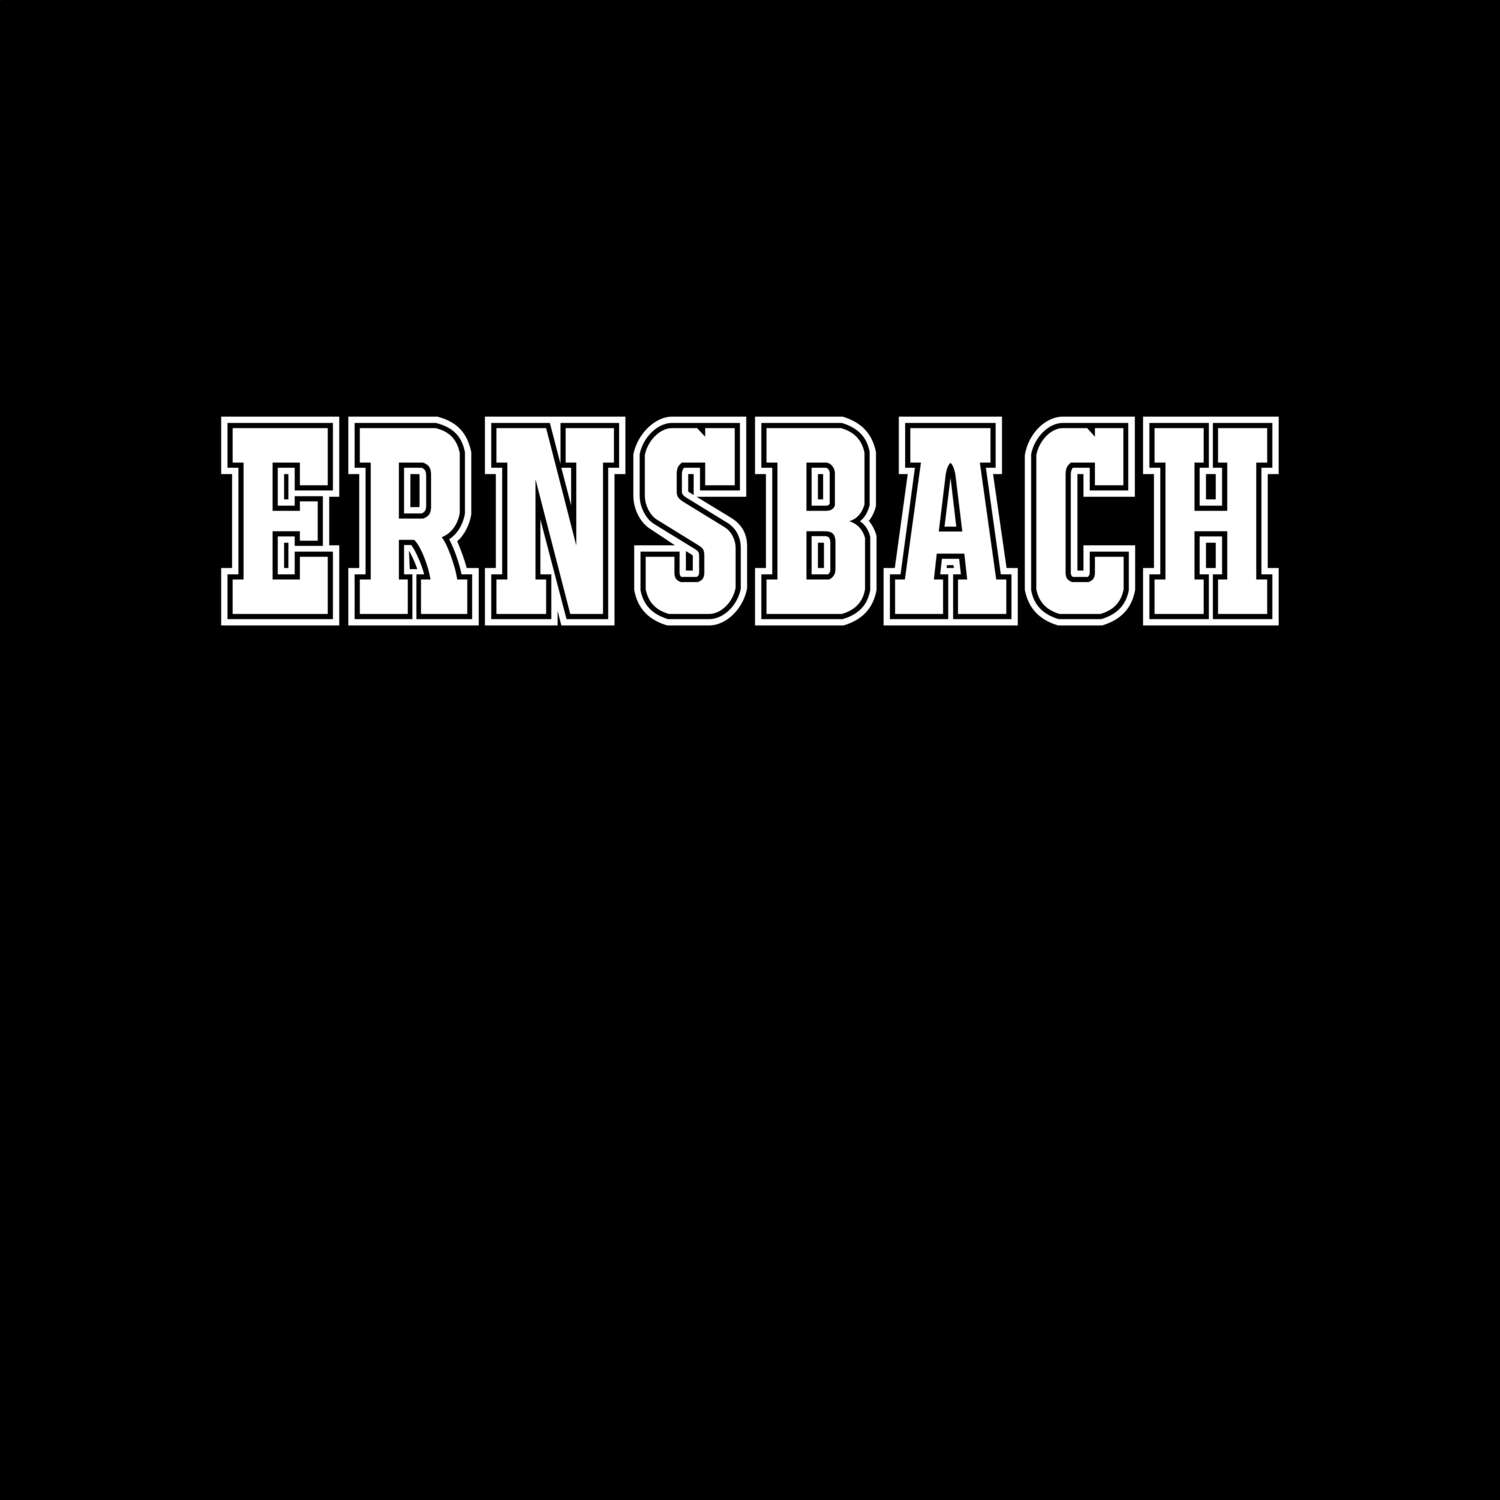 Ernsbach T-Shirt »Classic«